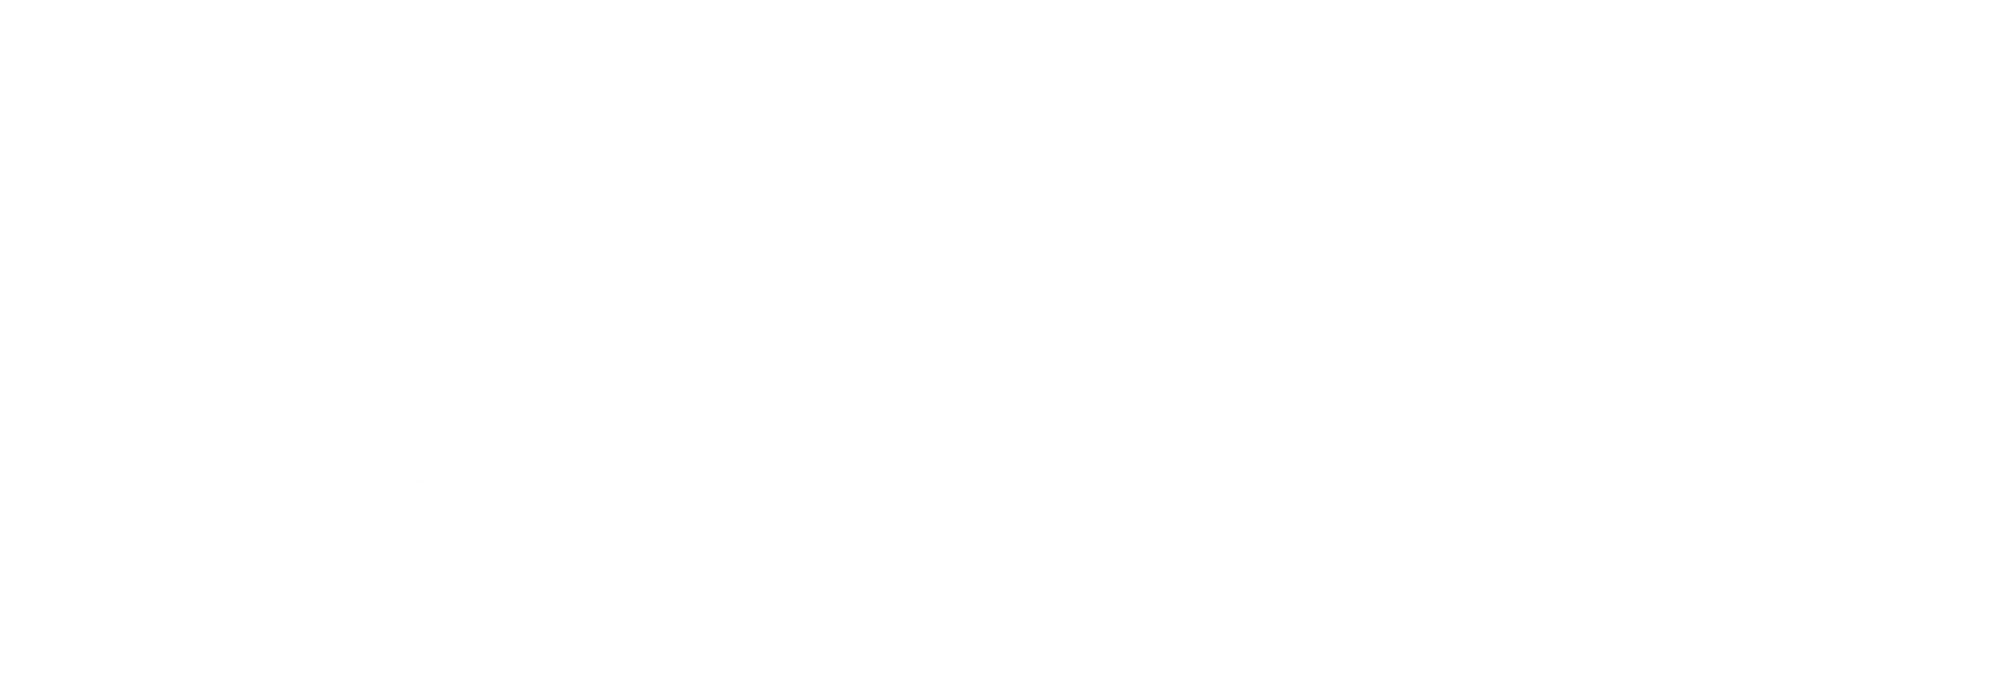 WordPress logotype standard white